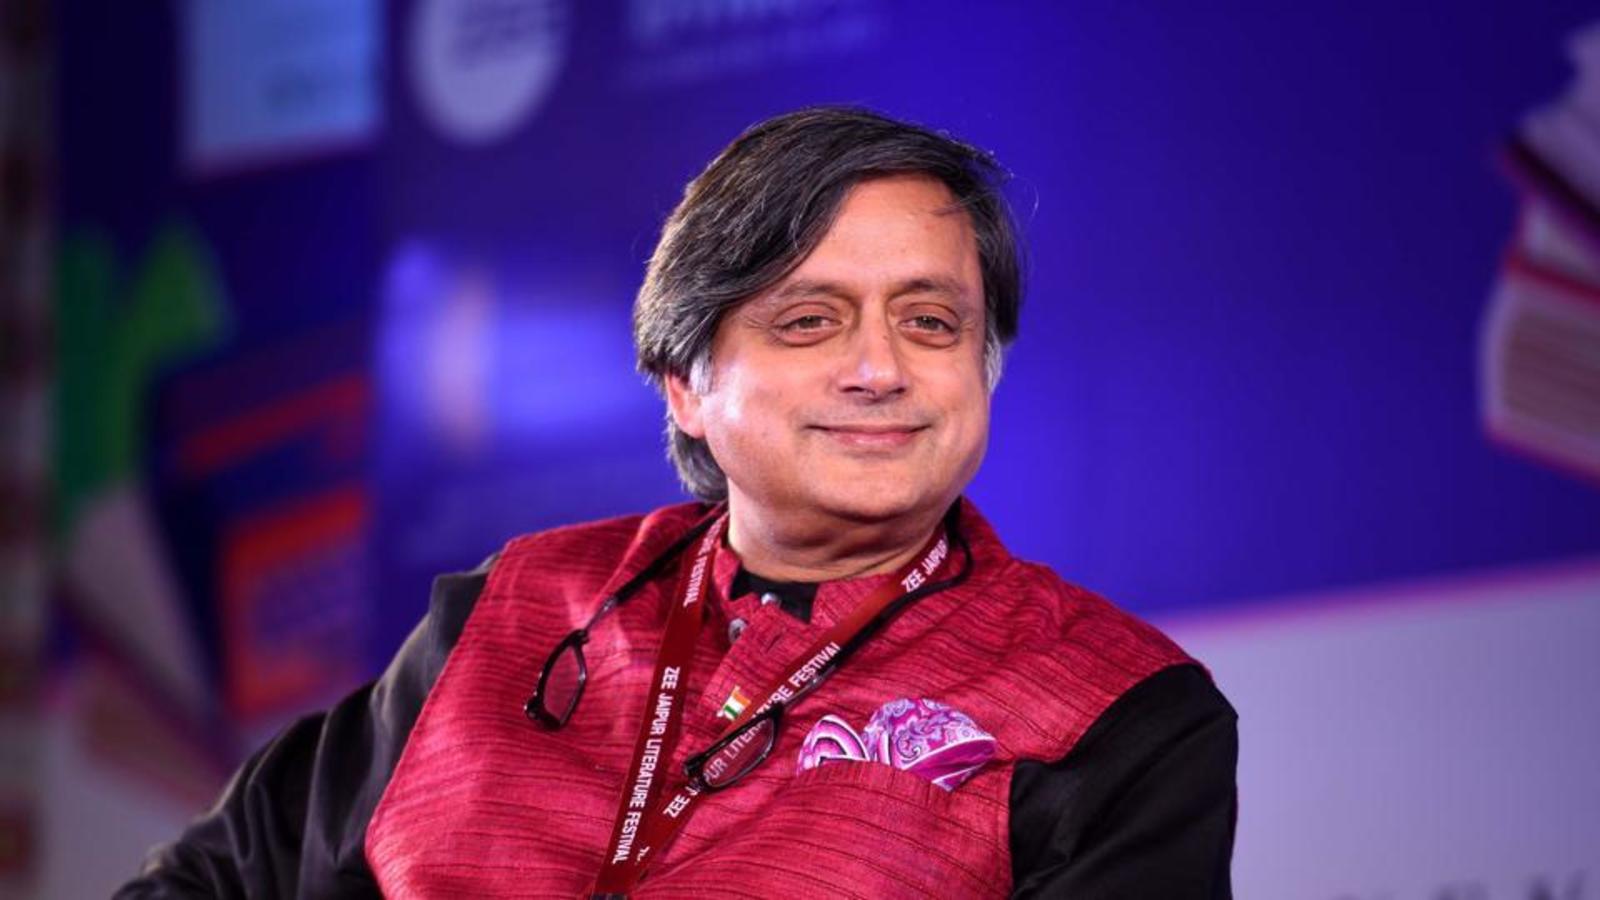 Faith in judiciary vindicated, says Shashi Tharoor on court verdict | Latest News Delhi - Hindustan Times